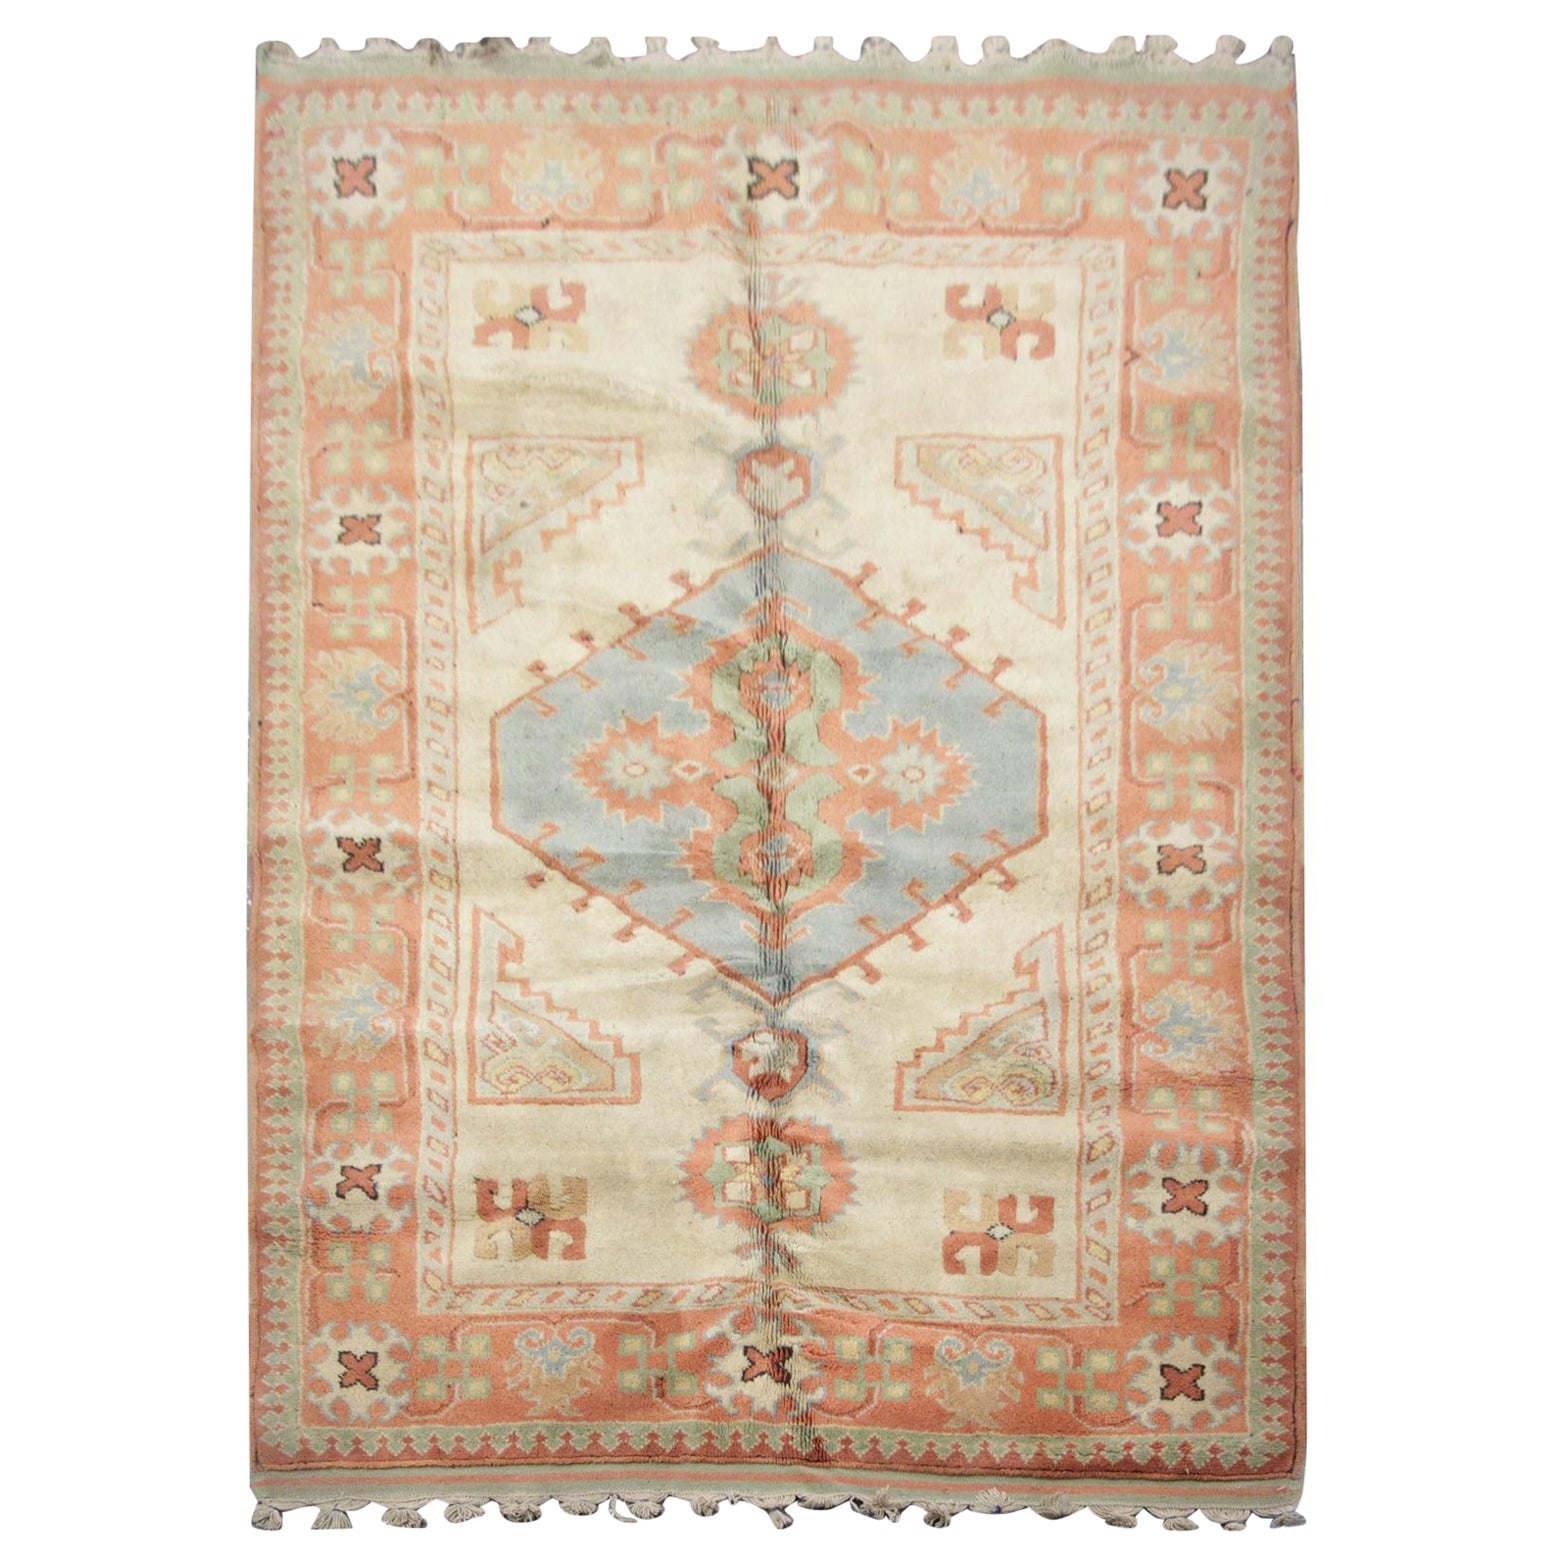 Vintage Rug Handmade Carpet, Turkish Rug Milas Rustic Living Room Rugs for Sale